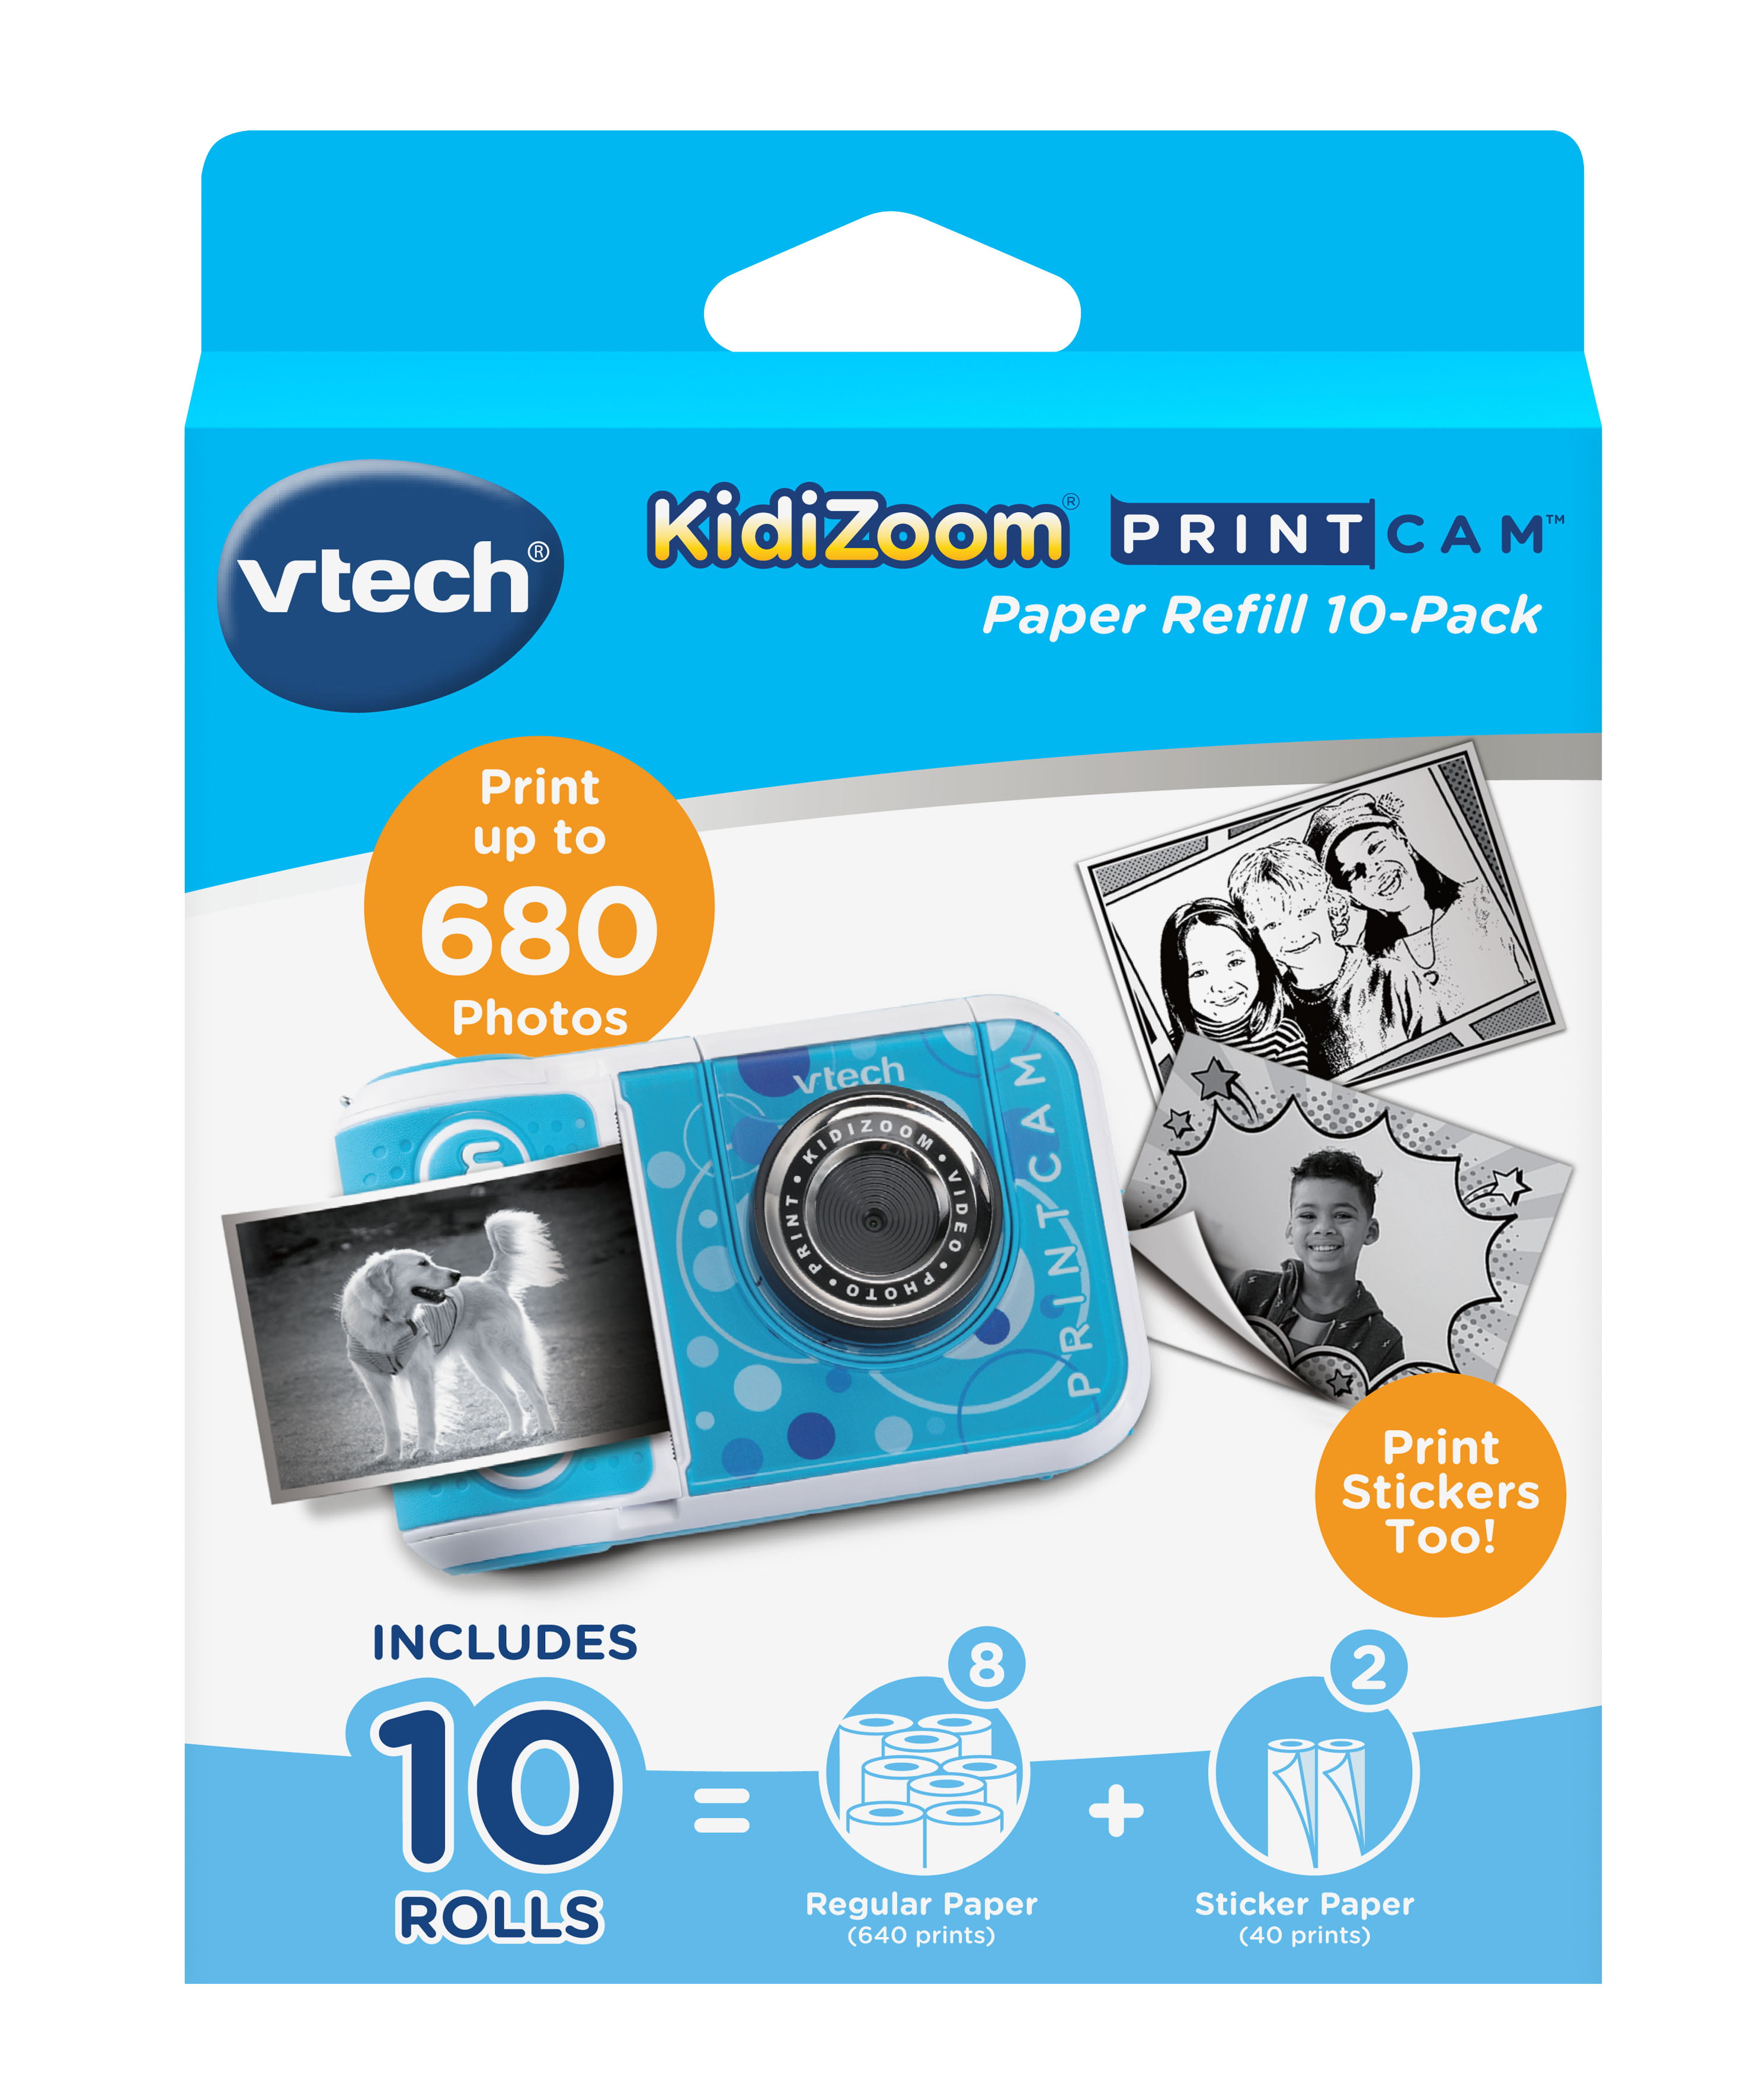 VTech KidiZoom Printcam Paper Refill Pack - 5 Rolls Per Pack